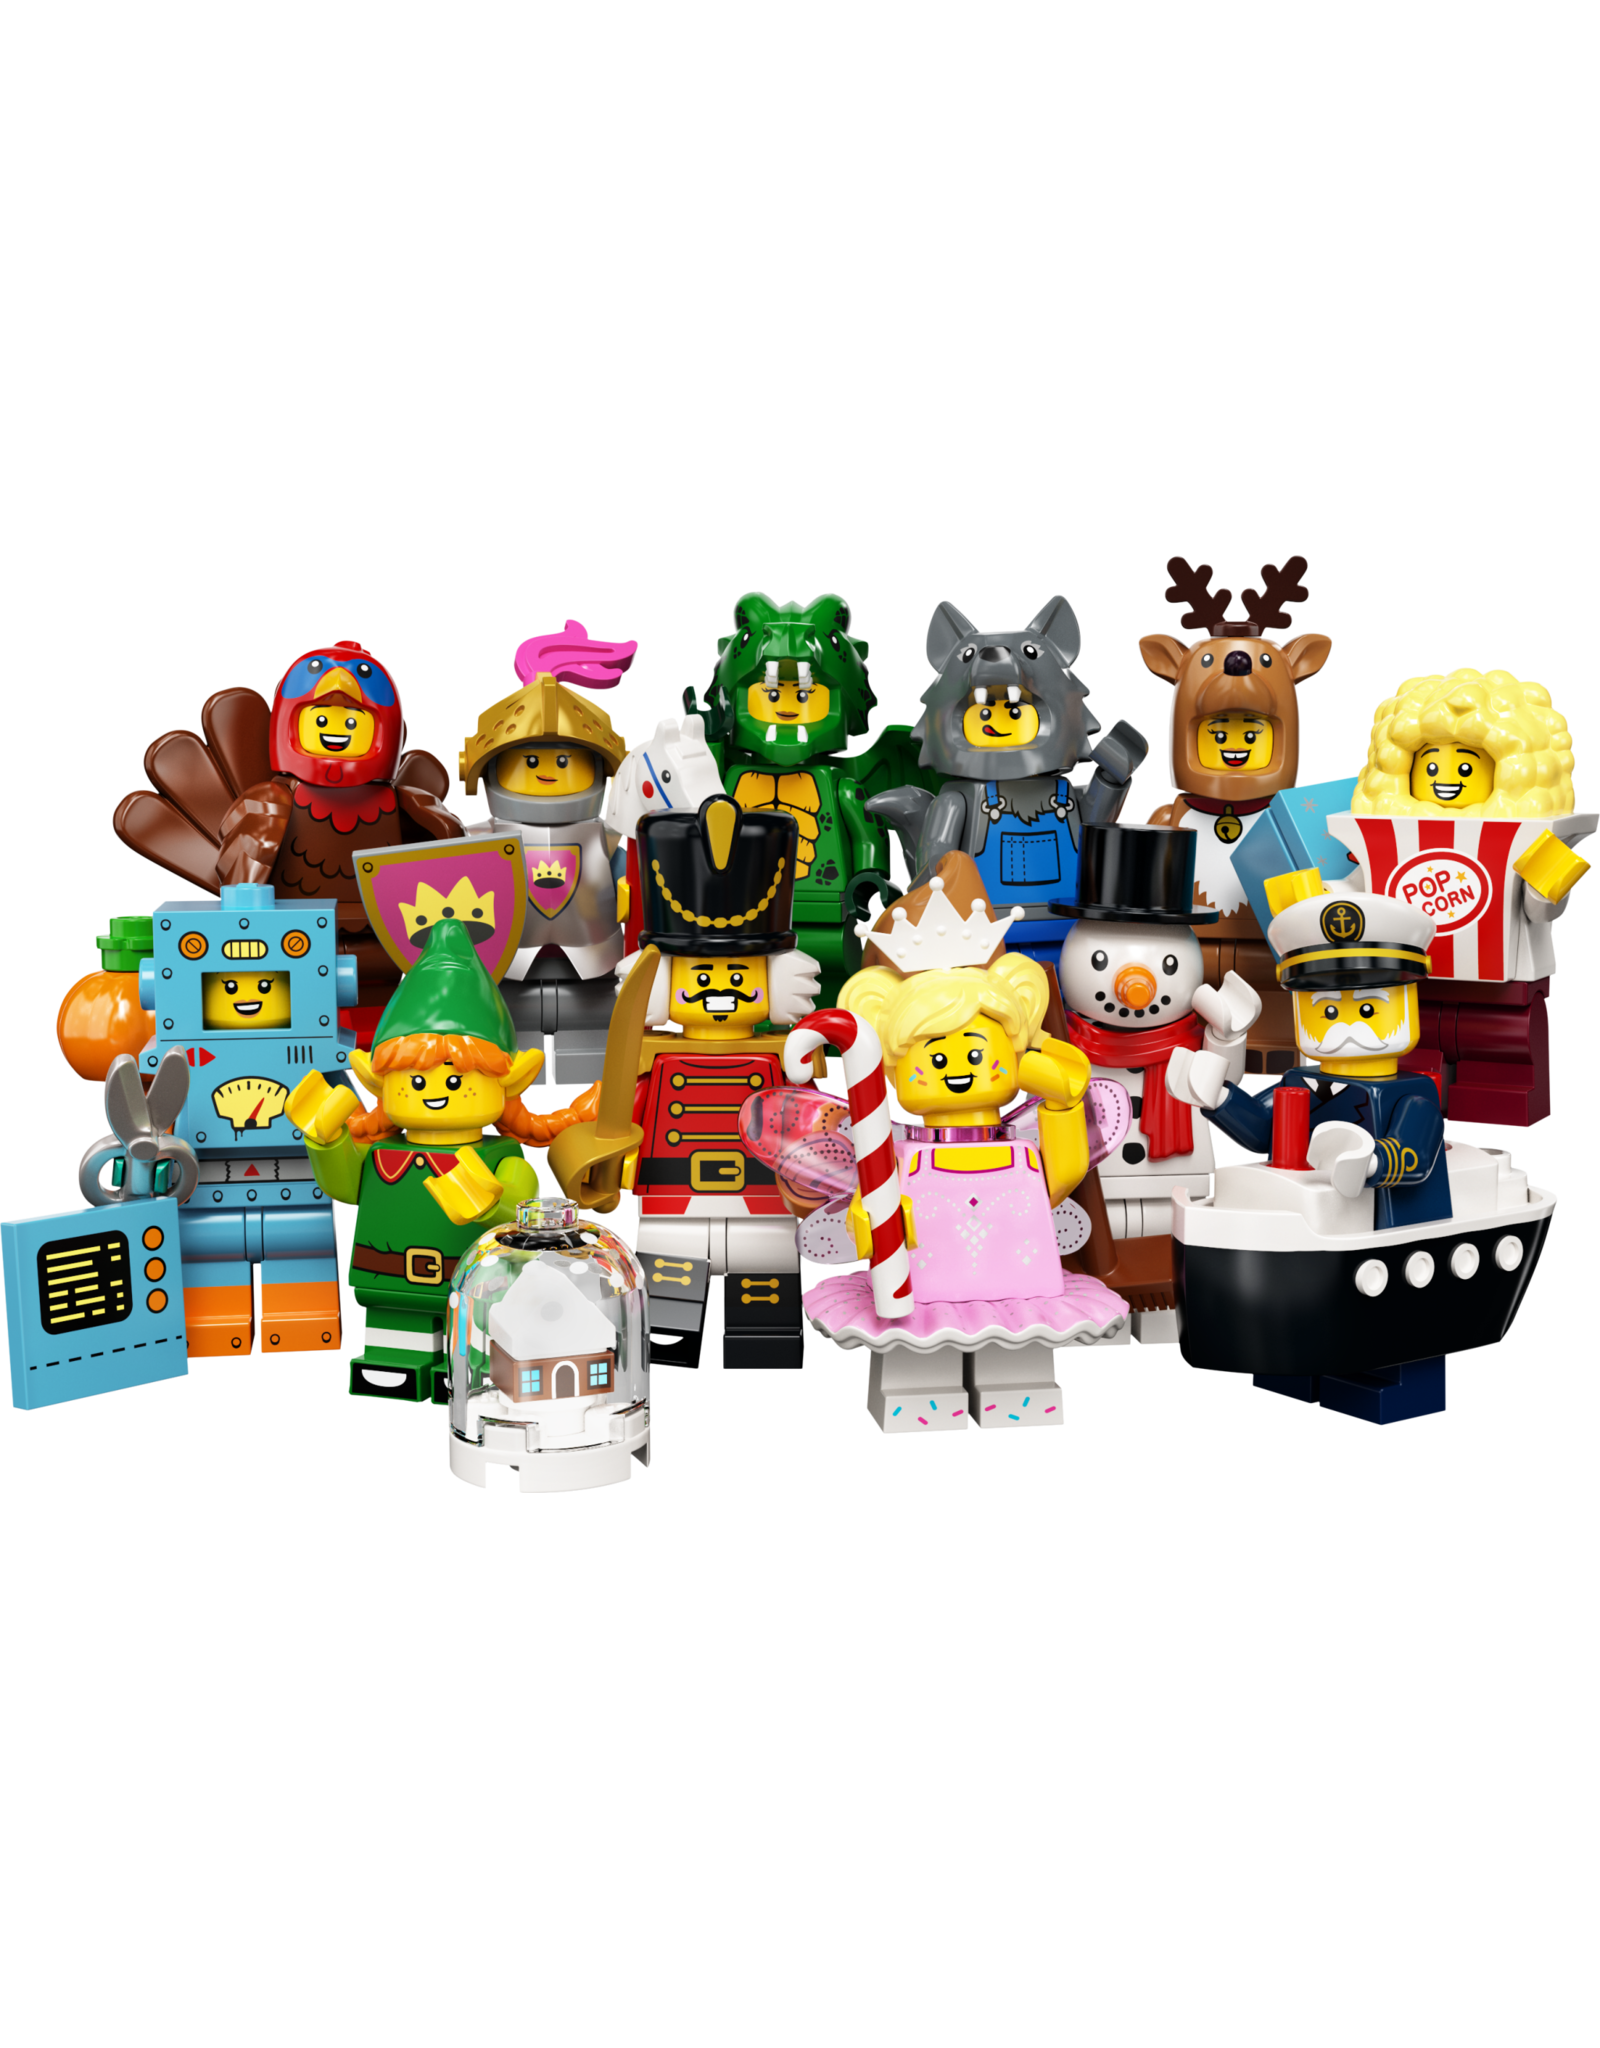 LEGO Minifigures 71034 Minifigures Series 23